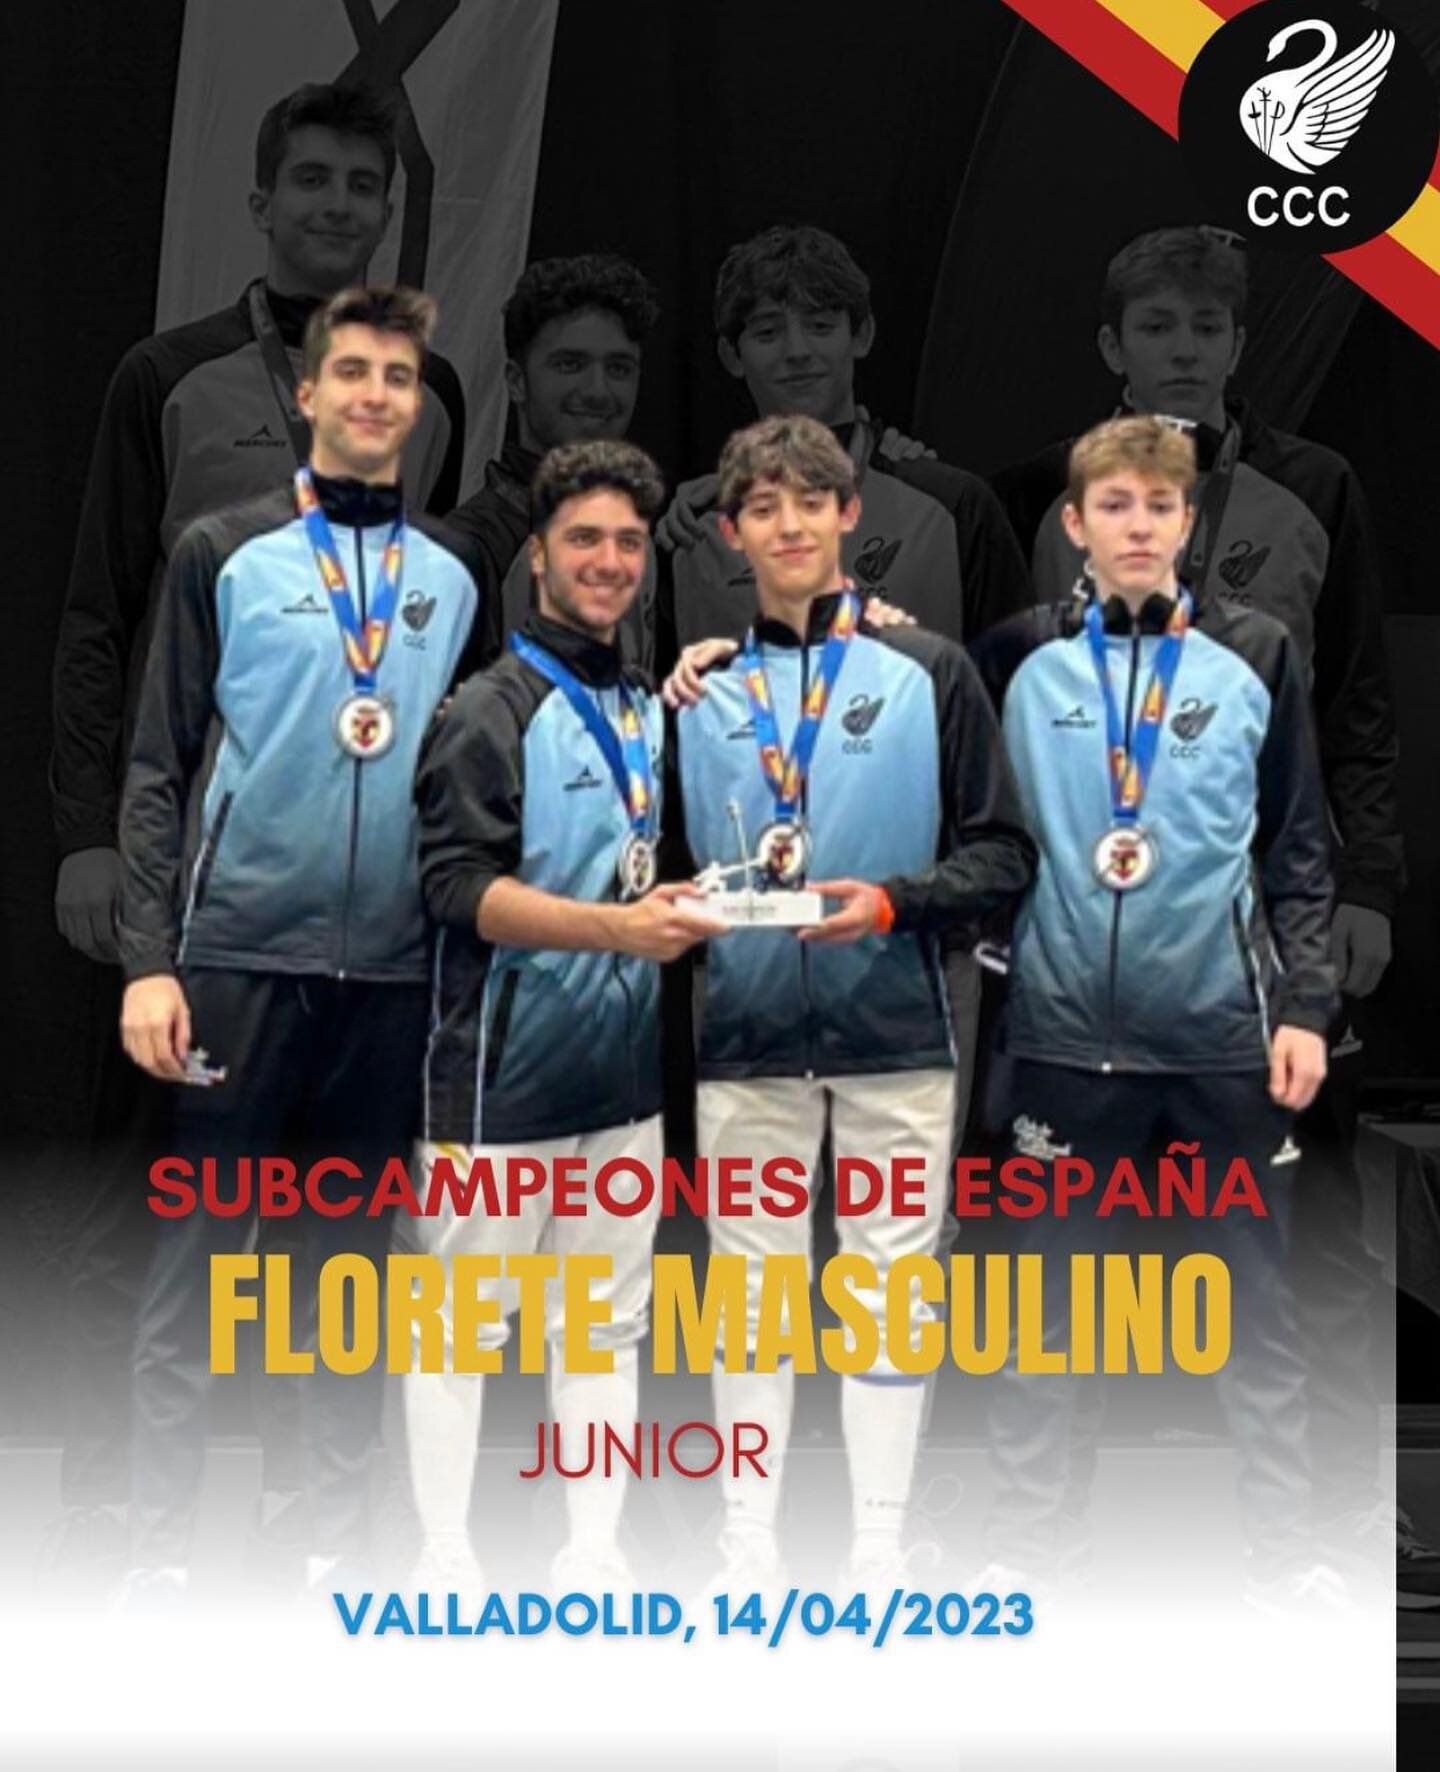 Silver medal 🥈 at the Junior Spanish National Championship for Alex and his team!!! Fantastic team work!!🎉🤺👏 @esgrimacisneros